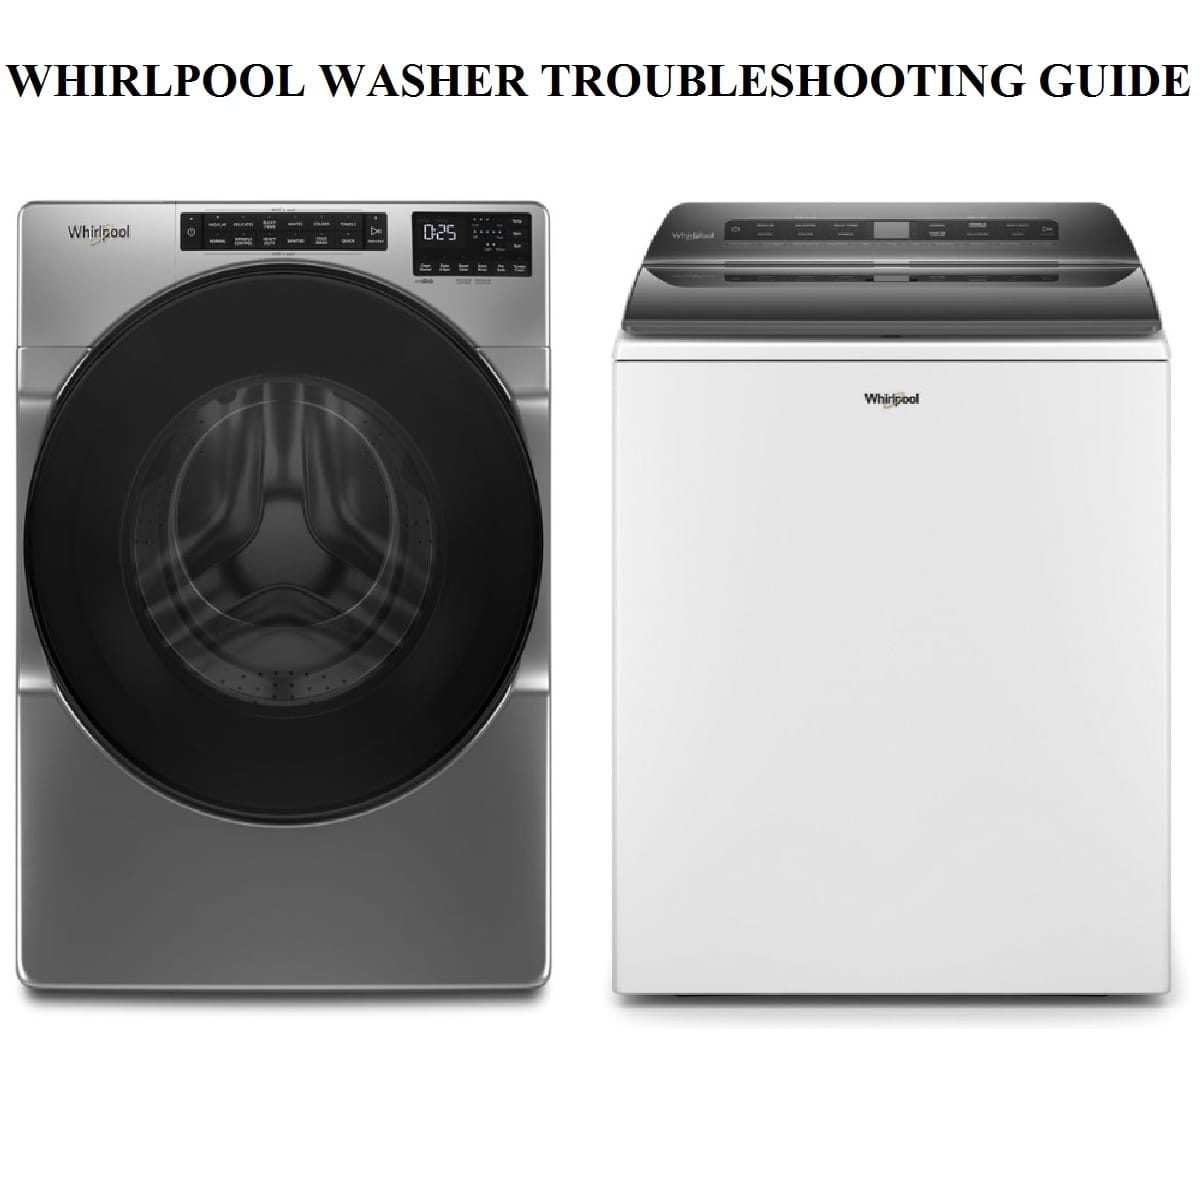 Whirlpool washer troubleshooting manual